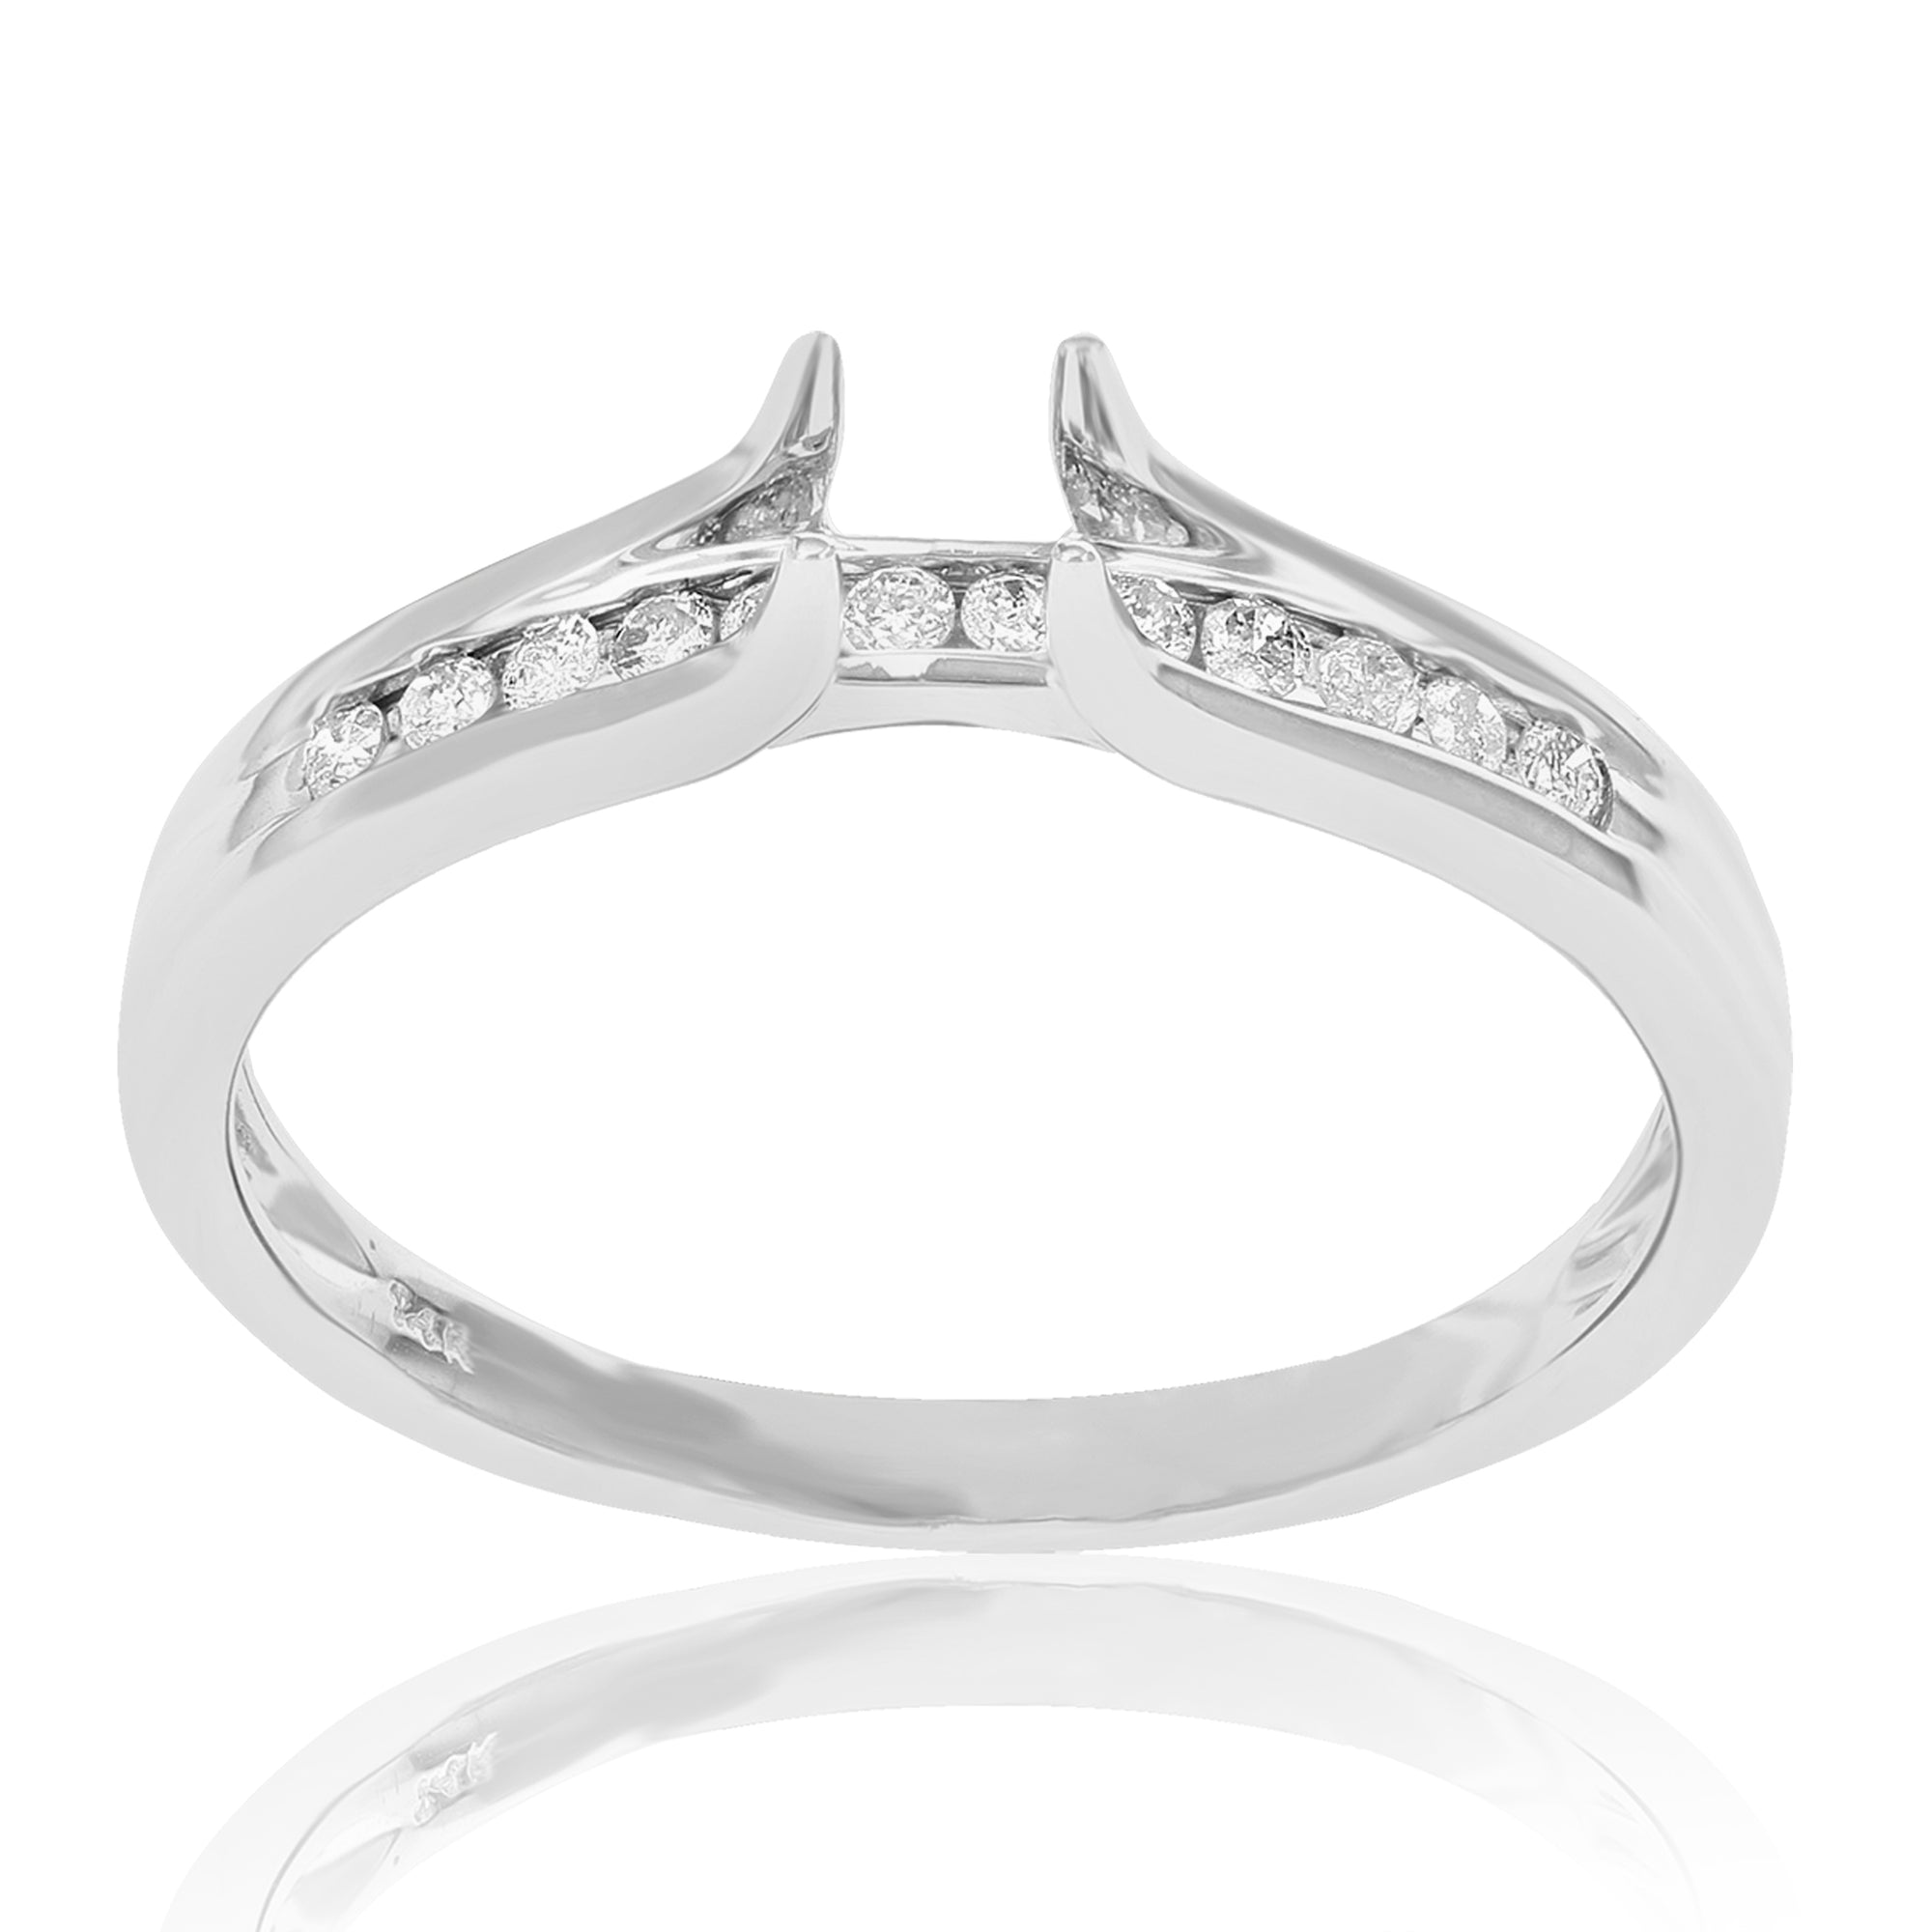 1/8 cttw Diamond Semi Mount Engagement Ring 14K White Gold Wedding Bridal Size 7